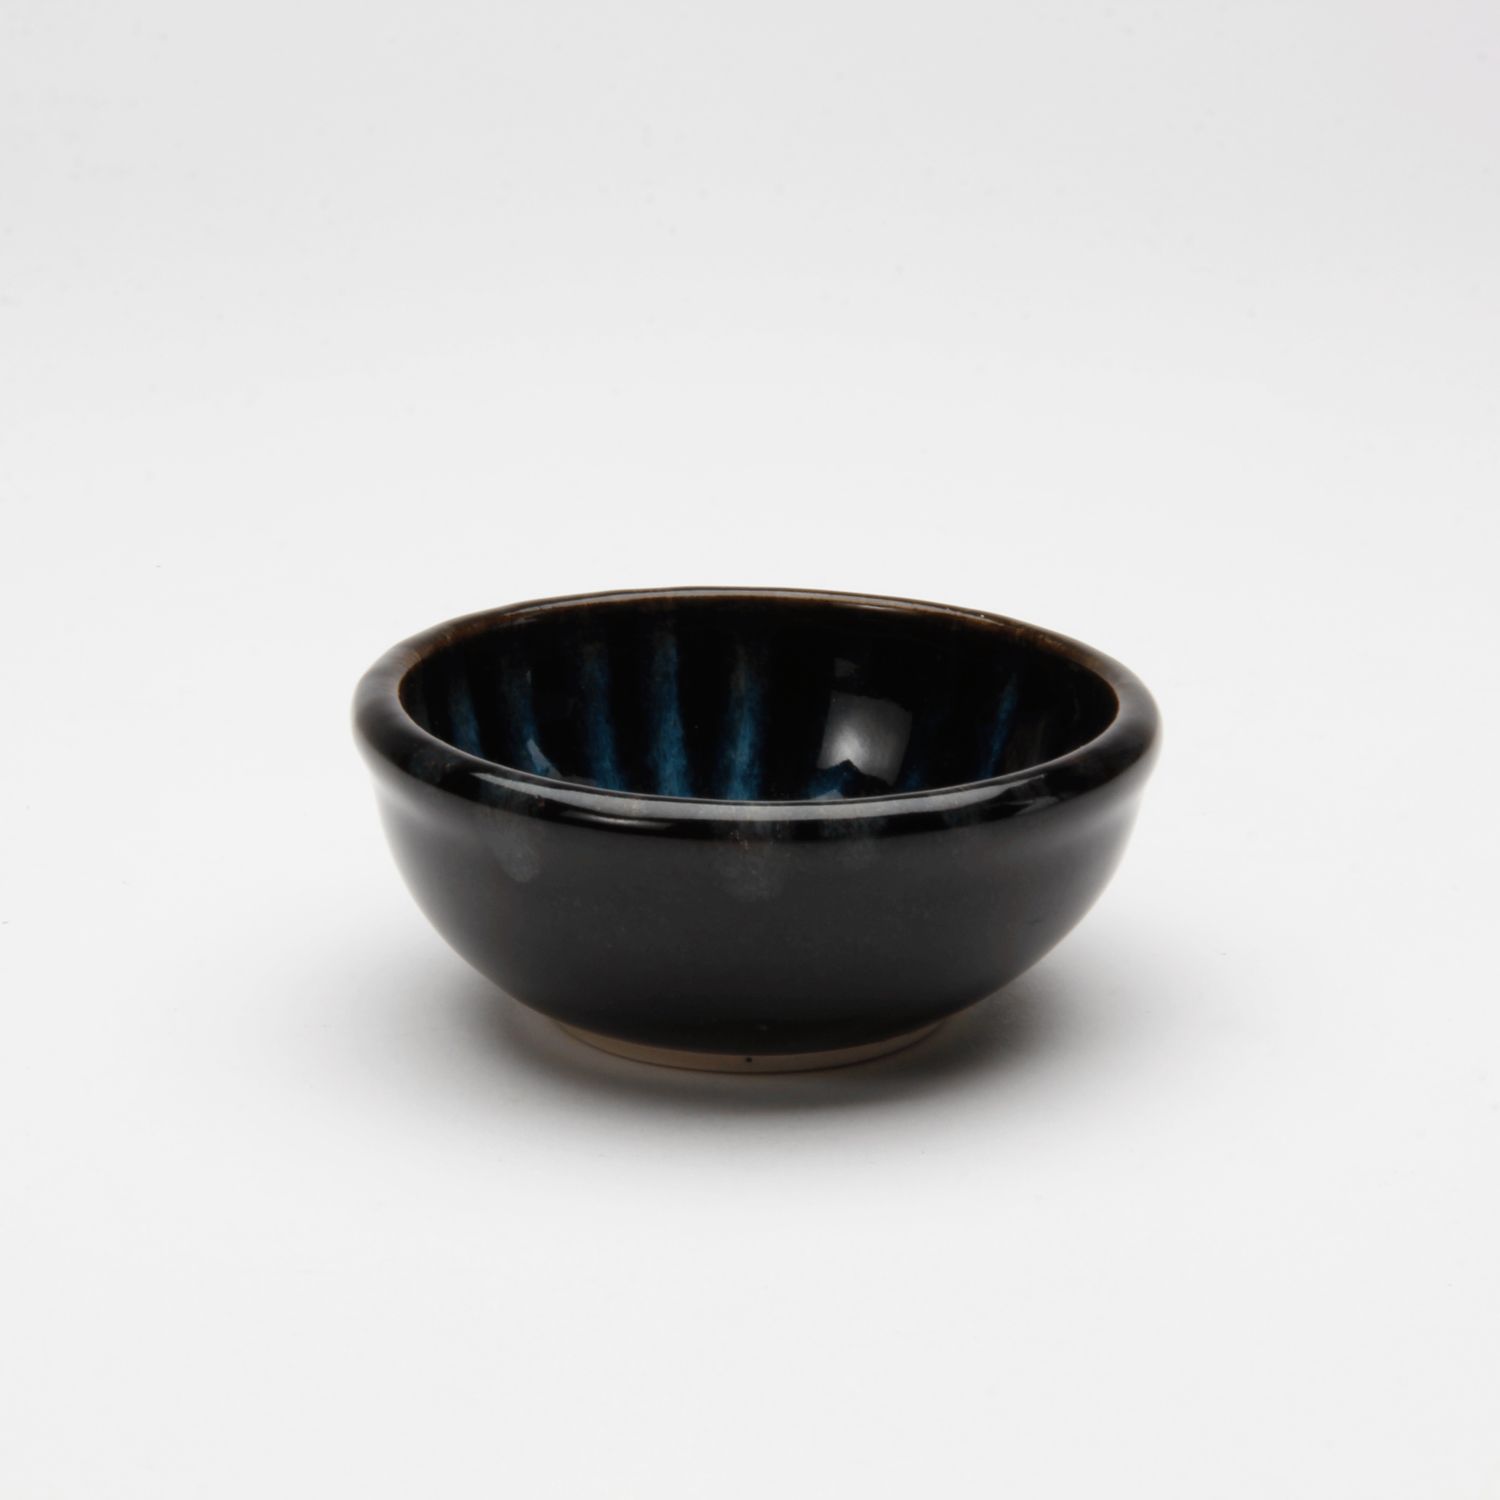 Minda Davis: Small Bowl Product Image 1 of 1